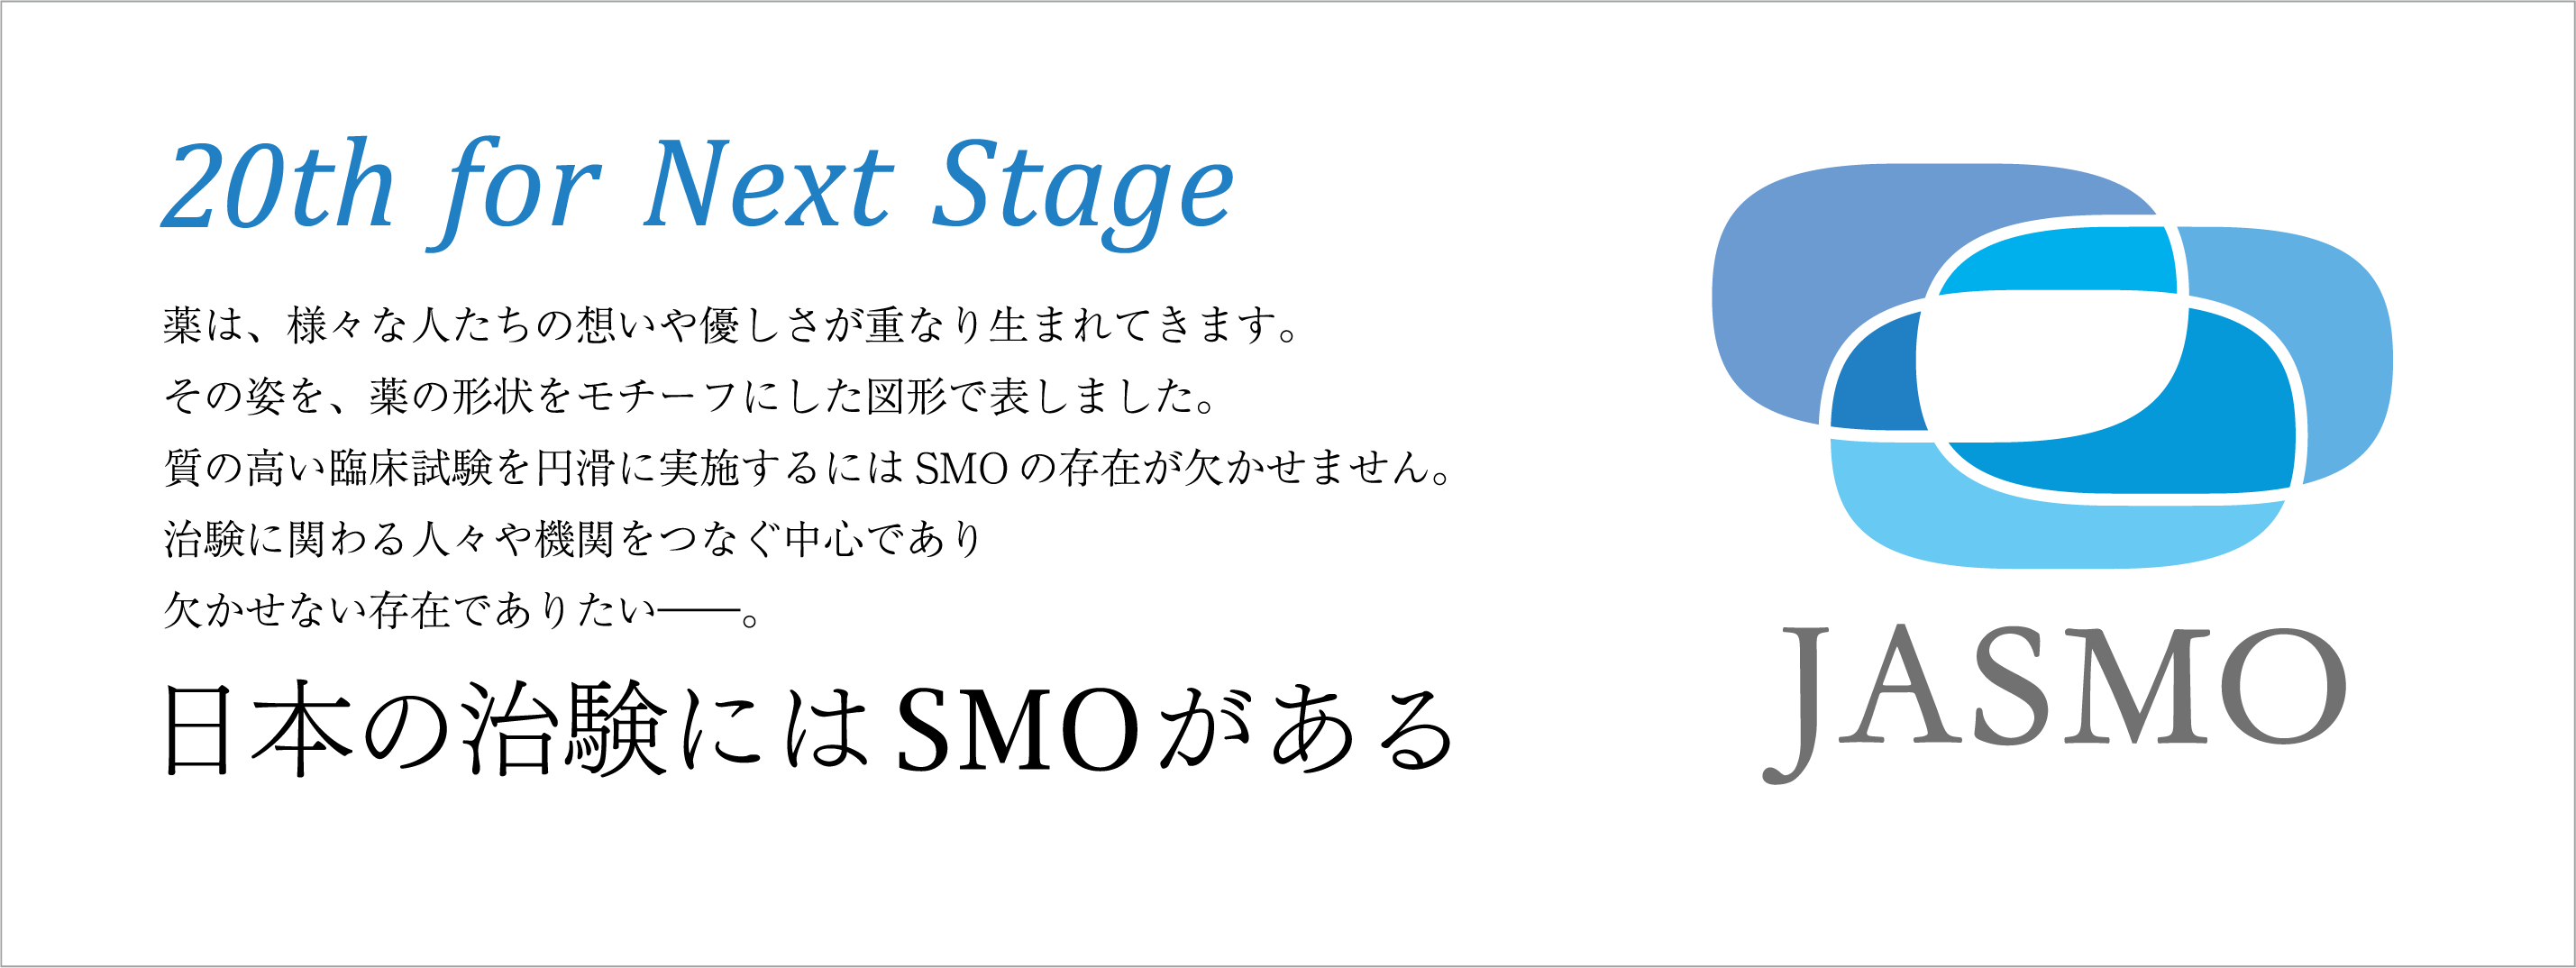 日本SMO協会